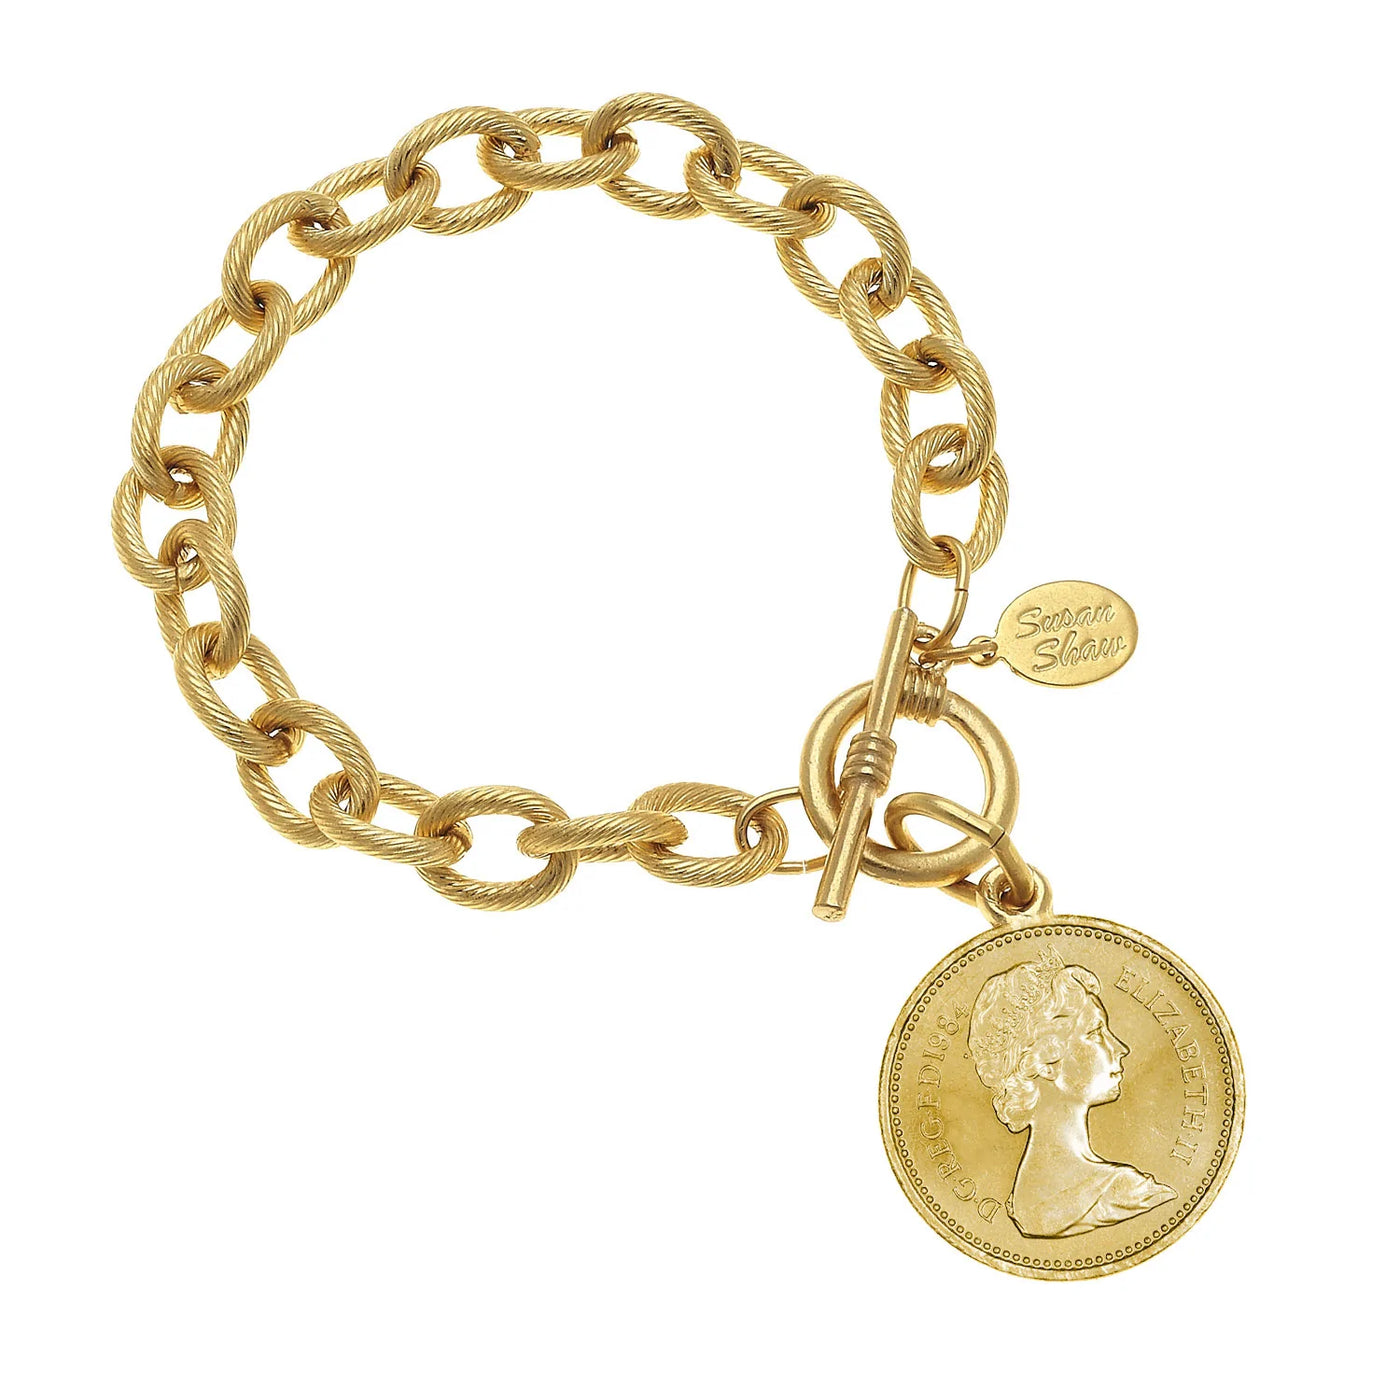 Queen Elizabeth II Coin Chain Bracelet by Susan Shaw